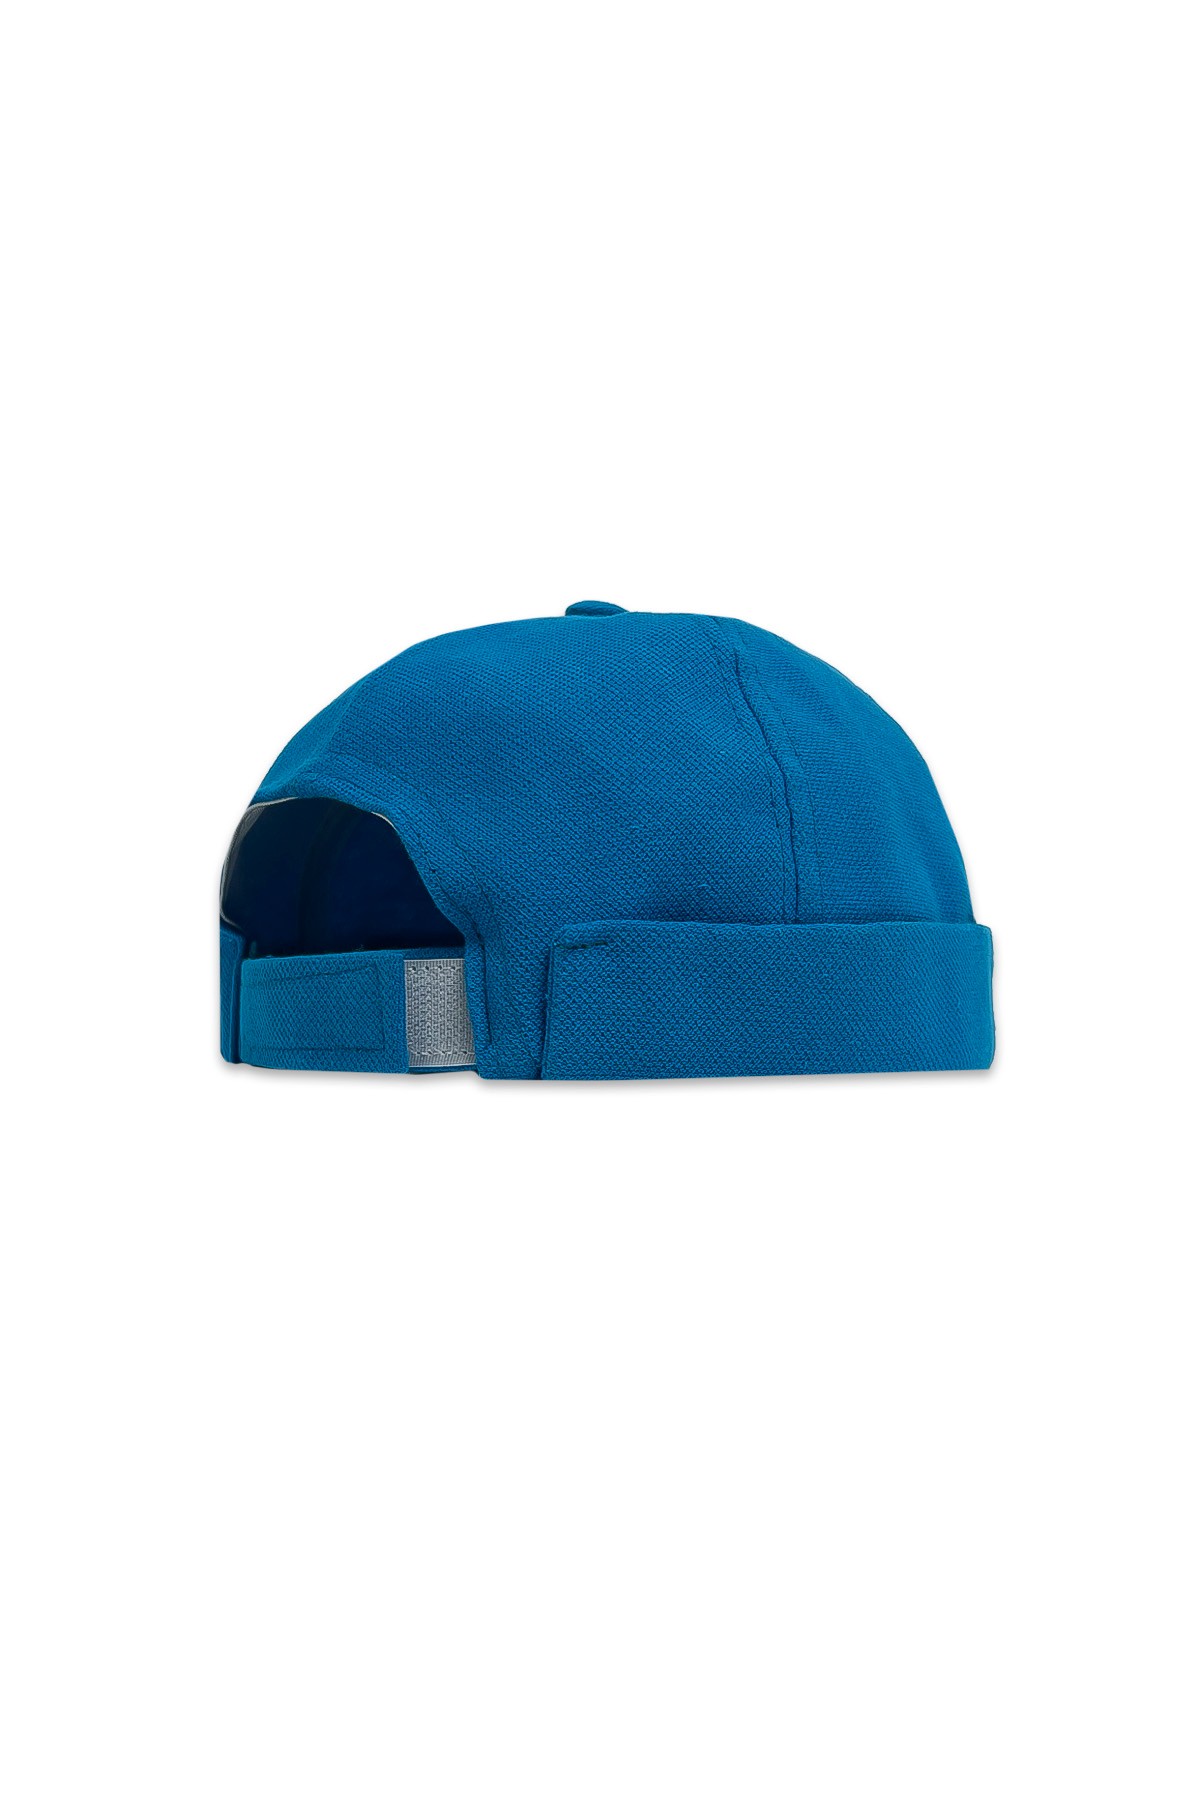 Nuo - قبعة - أزرق